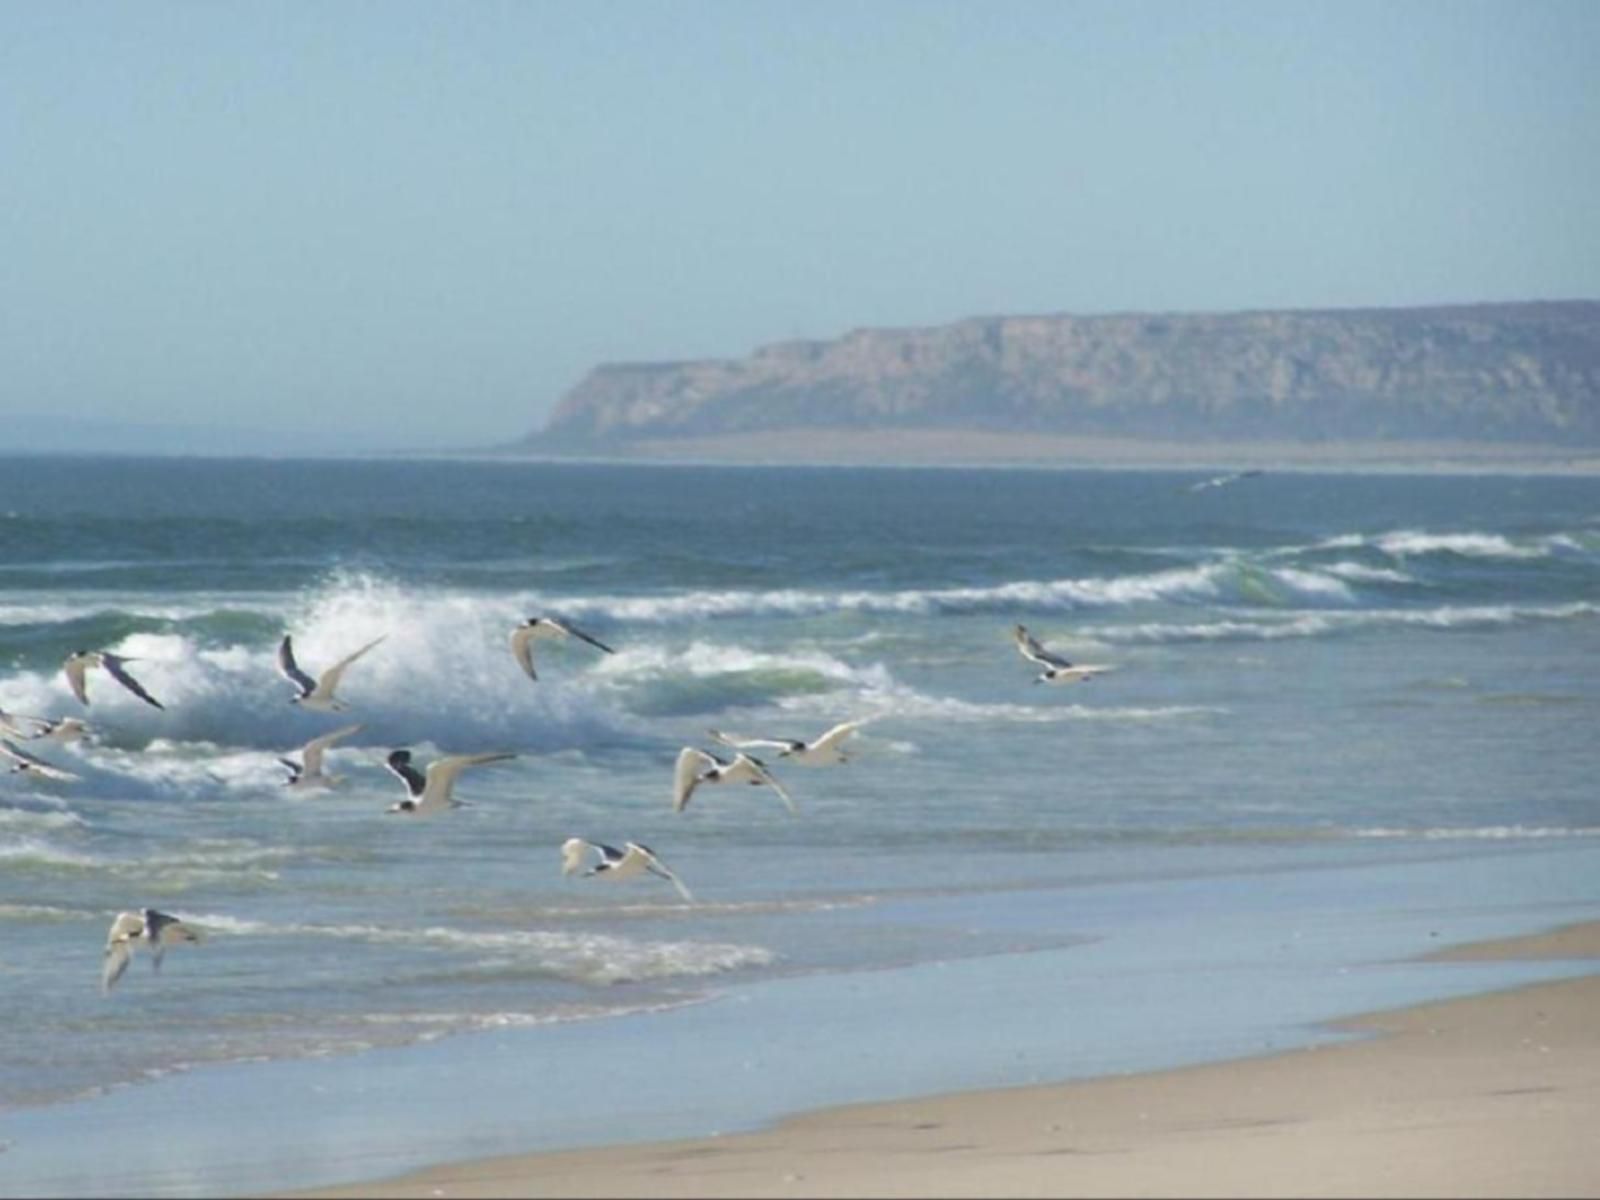 Draaihoek Lodge And Restaurant Elands Bay Western Cape South Africa Beach, Nature, Sand, Ocean, Waters